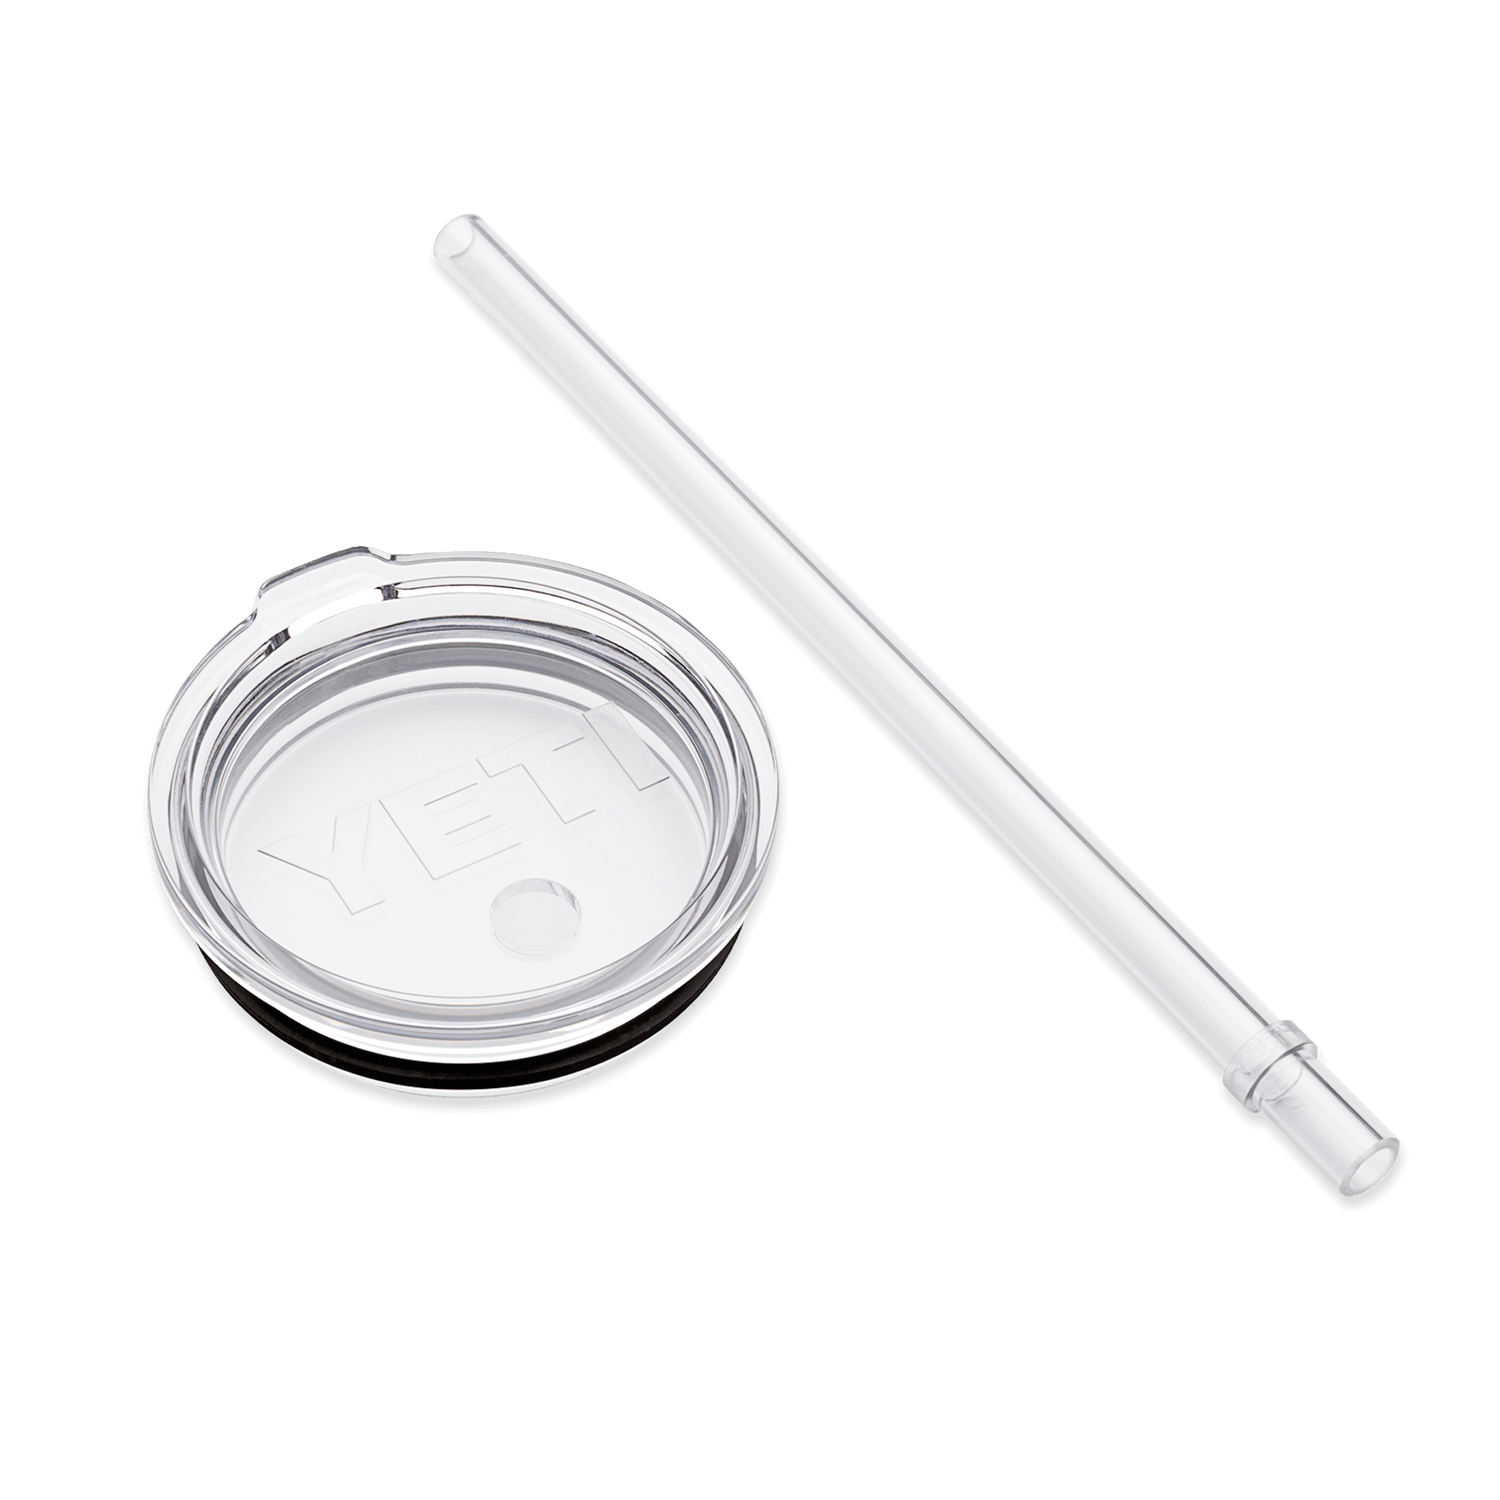 Rambler® 42 oz (1242 ml) Straw Mug – YETI EUROPE